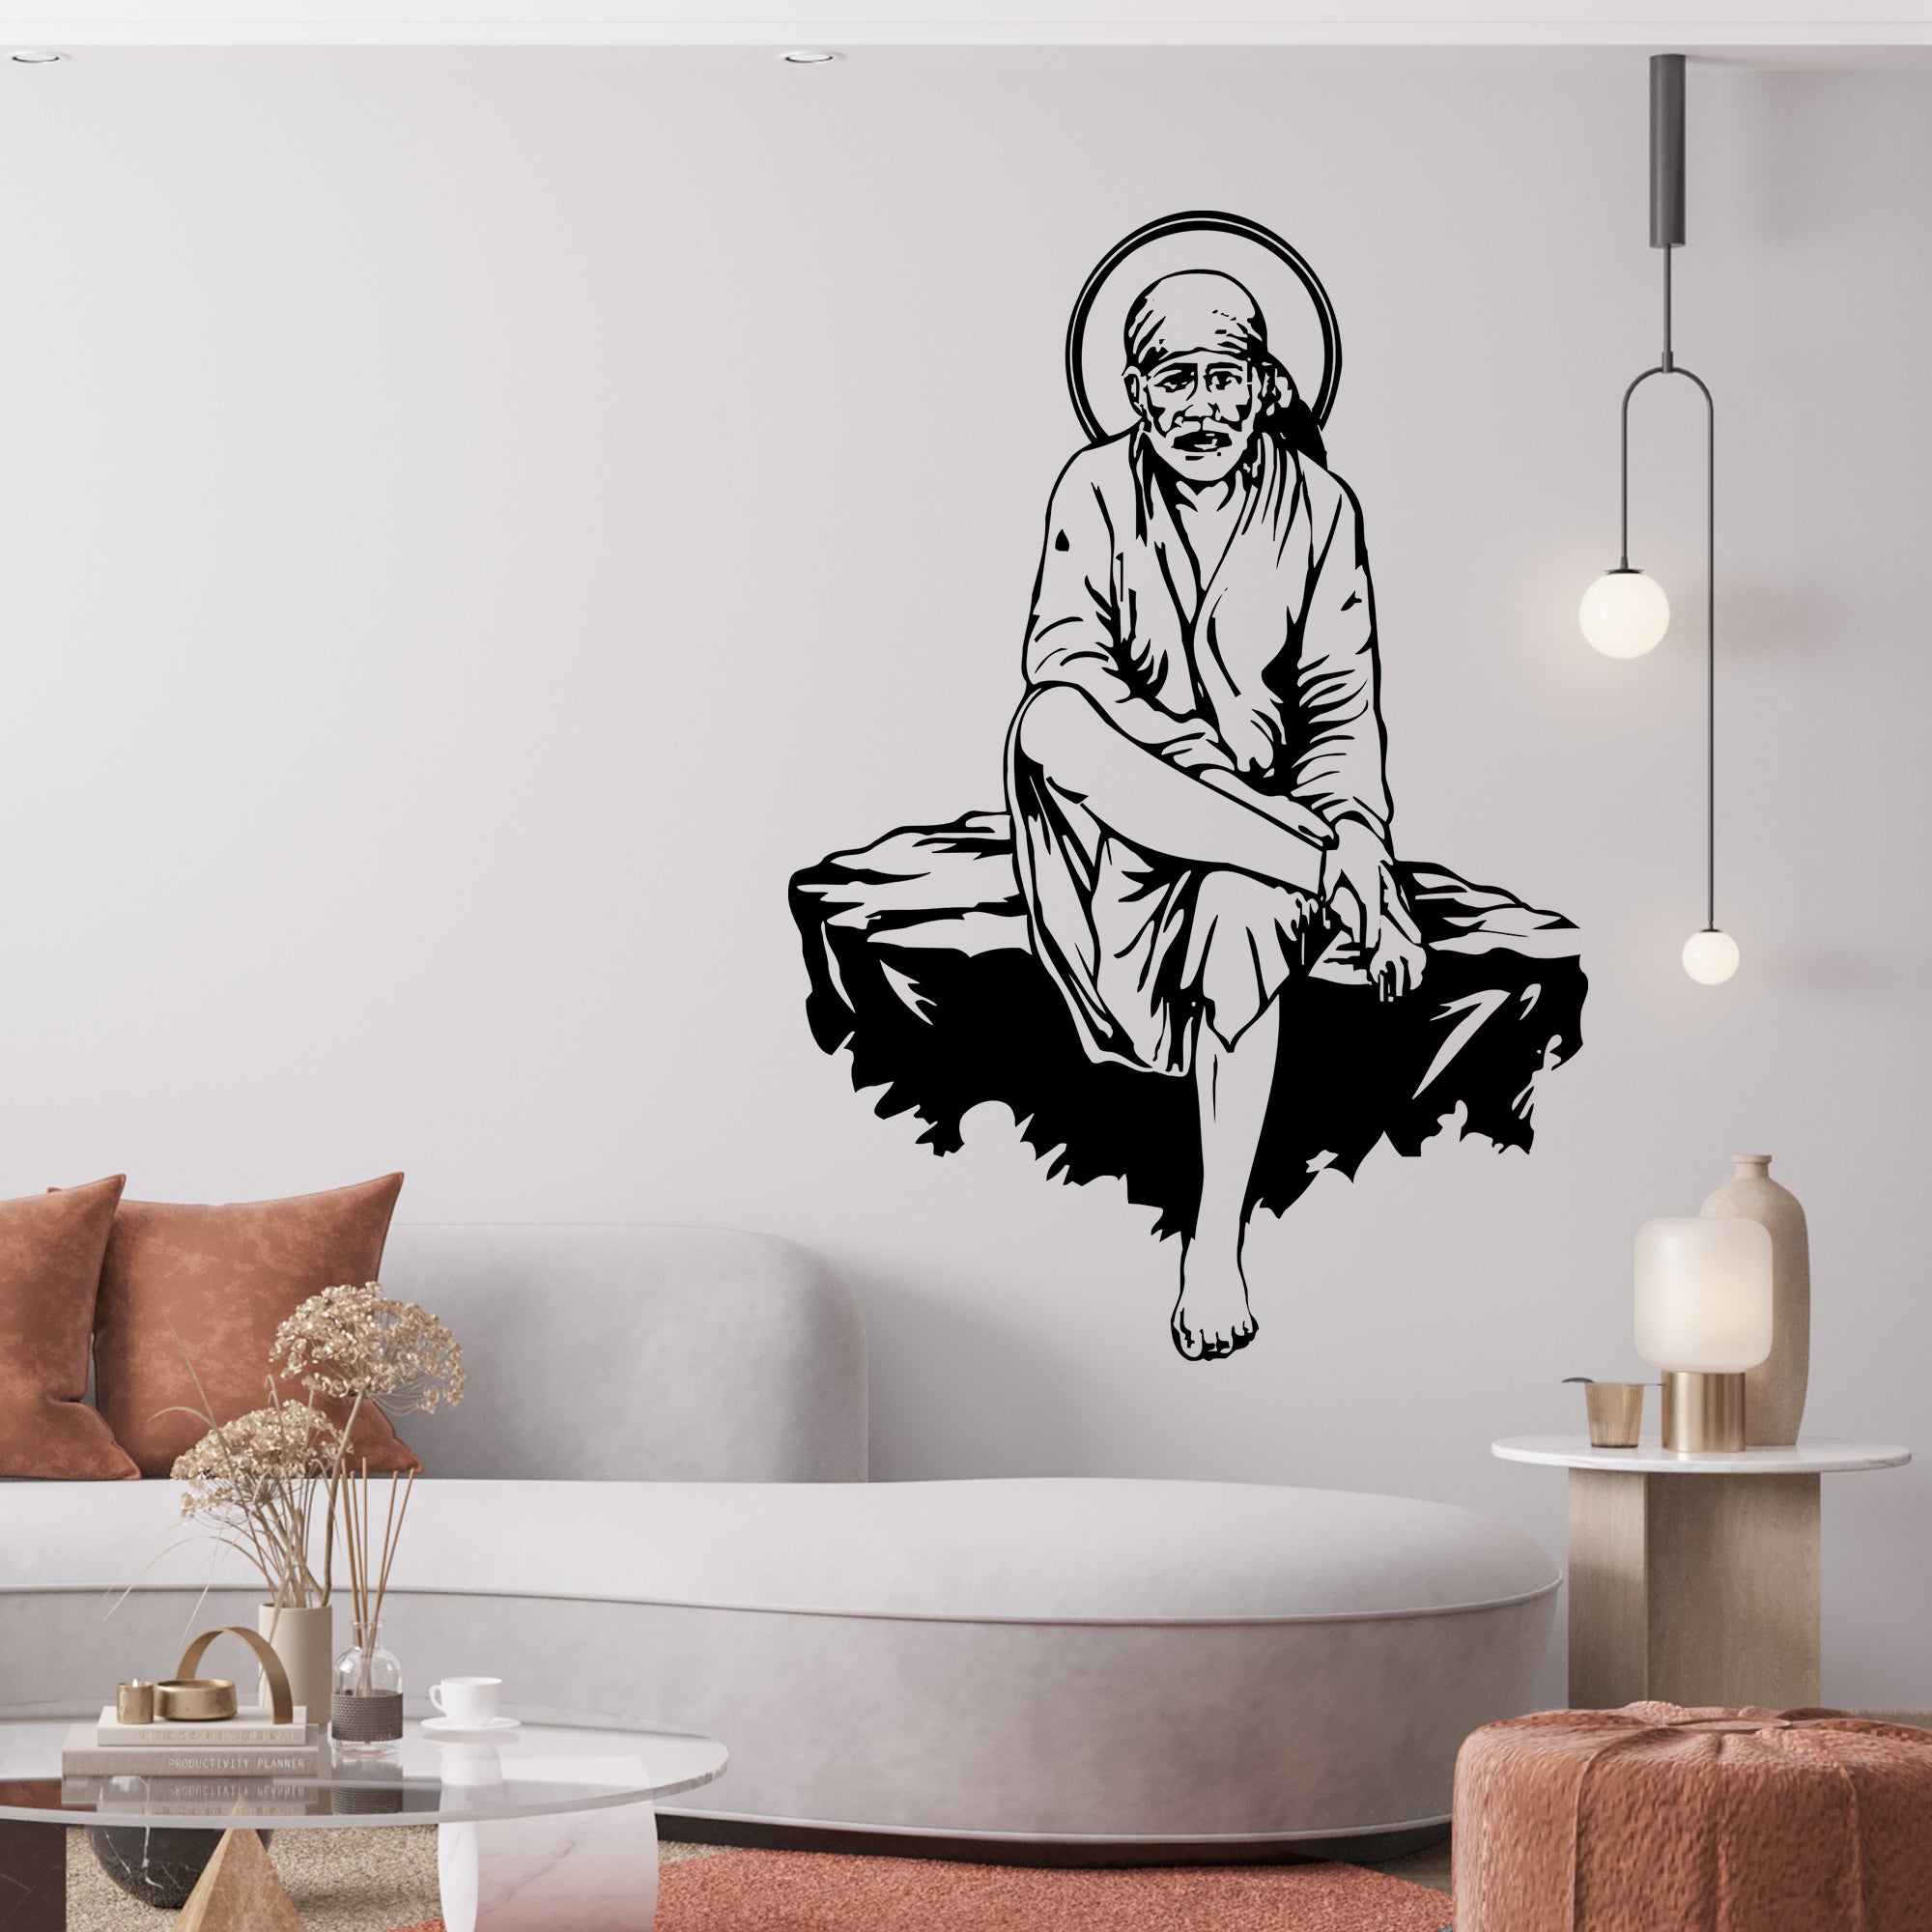 Sai Baba Religious Wall Sticker for Home